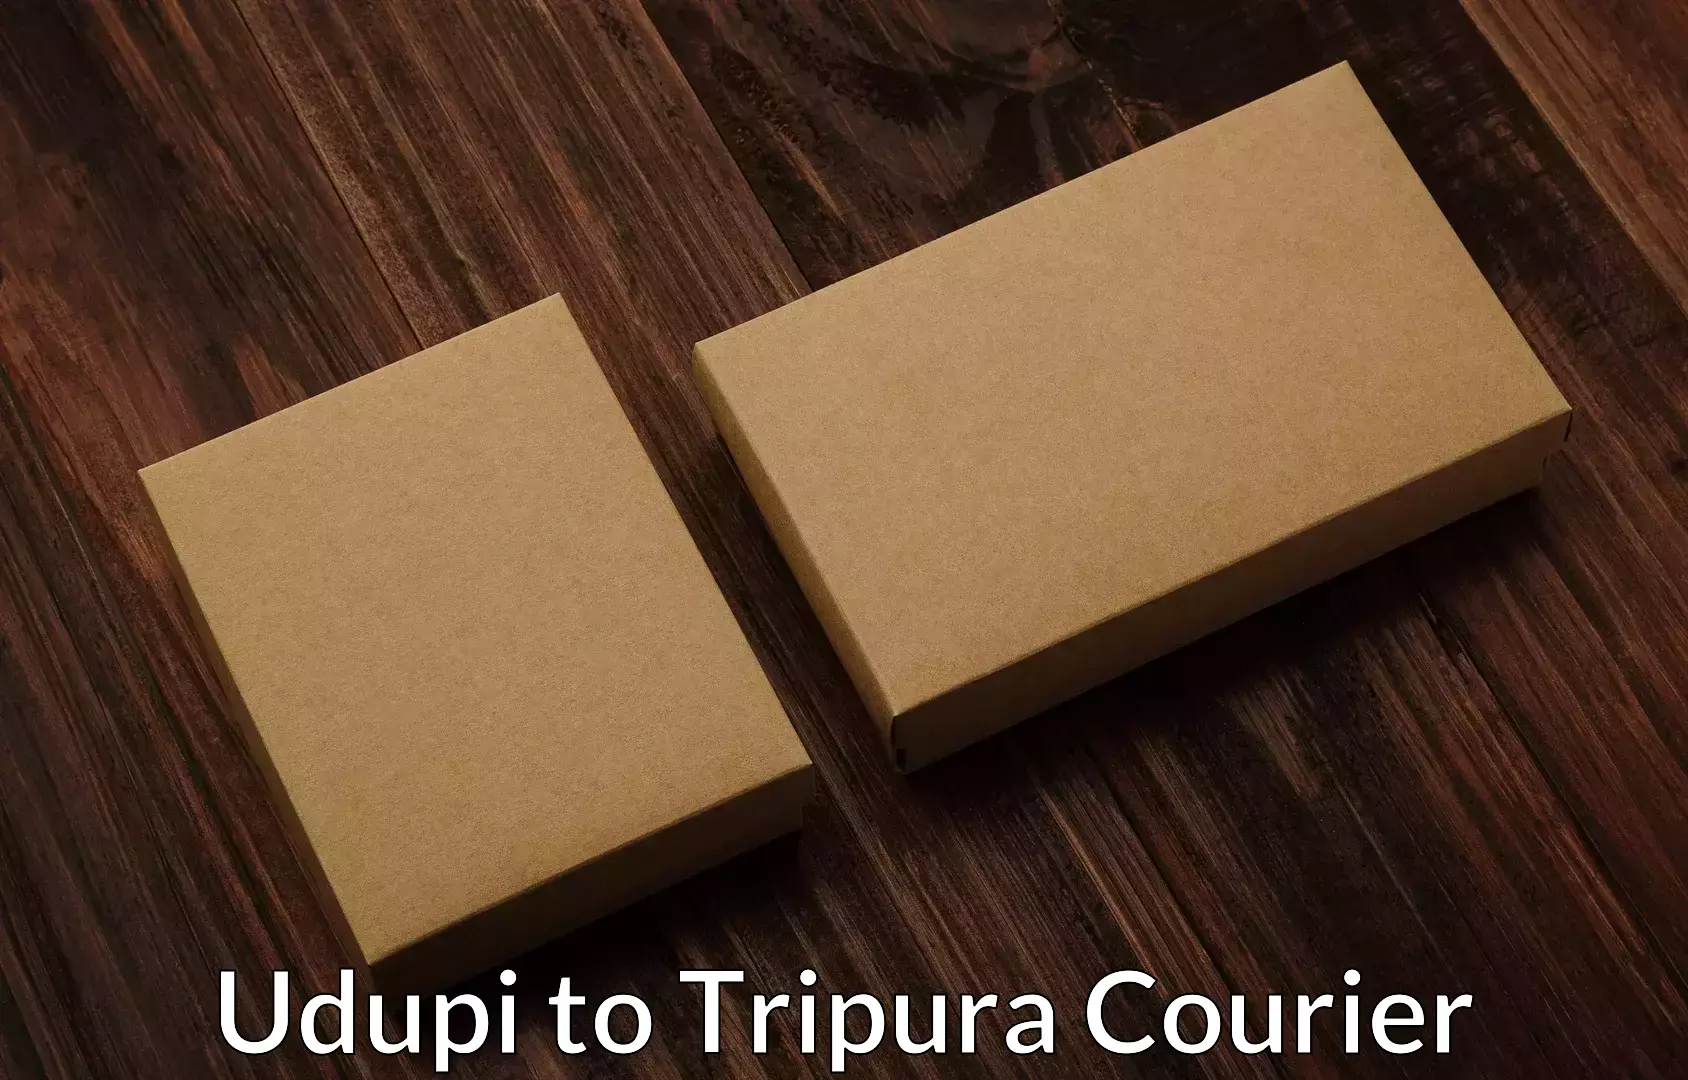 Professional moving strategies Udupi to Udaipur Tripura